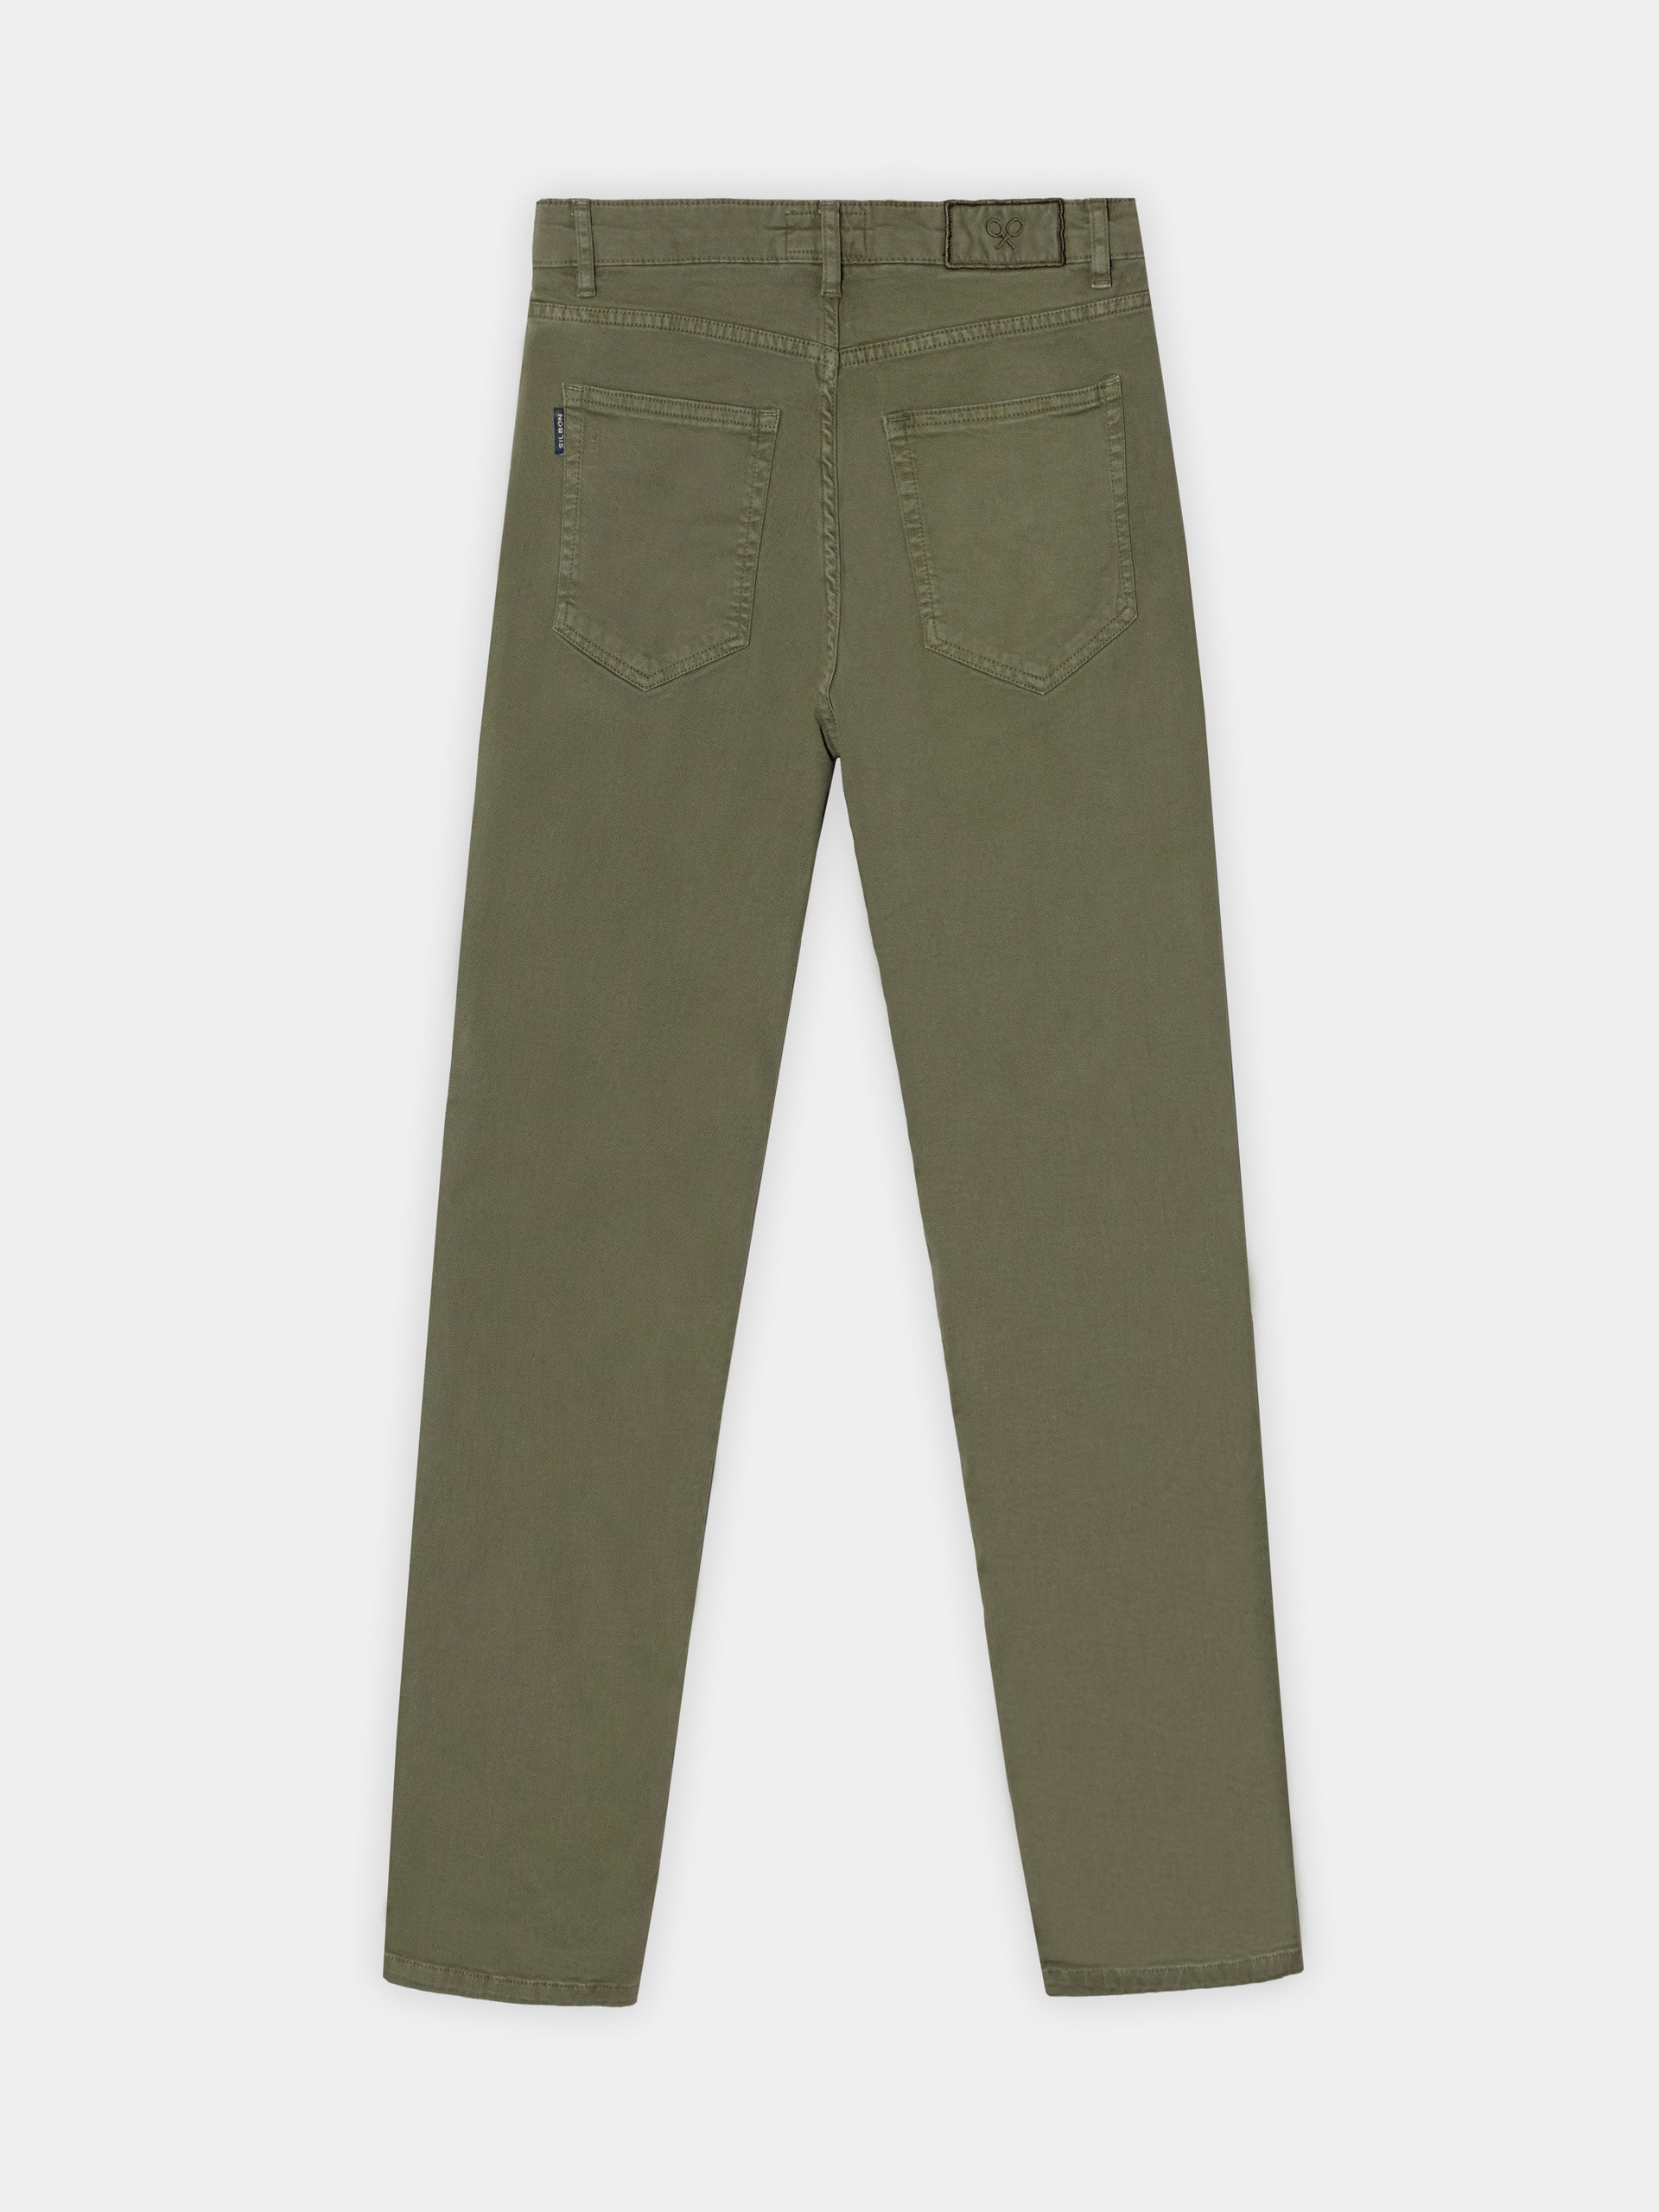 Green five-pocket sport pants